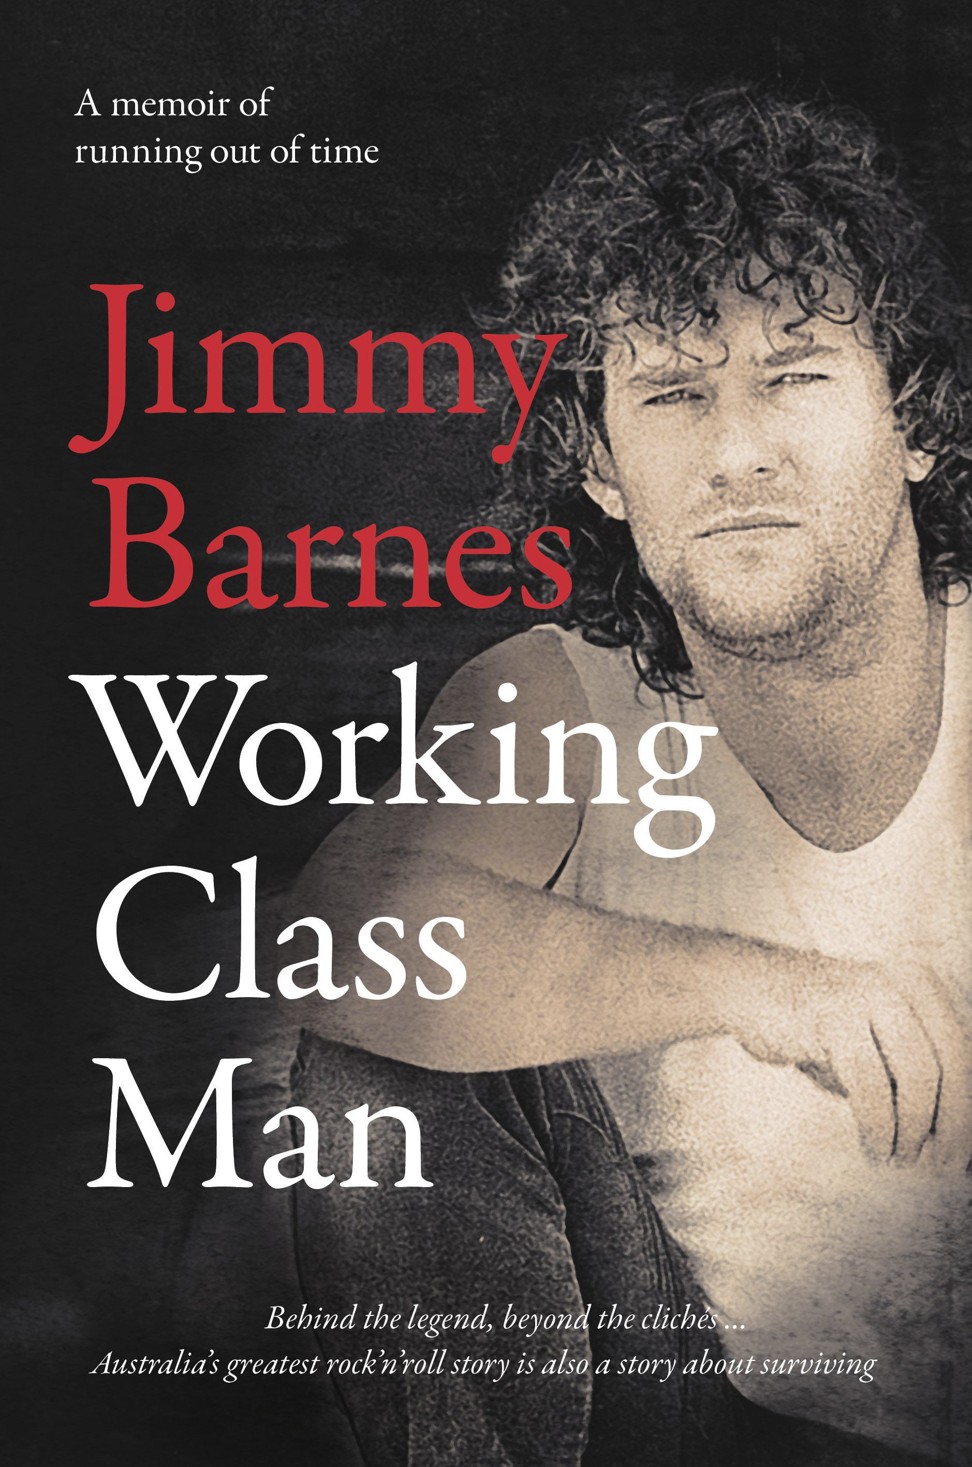 Barnes’ new book Working Class Man.